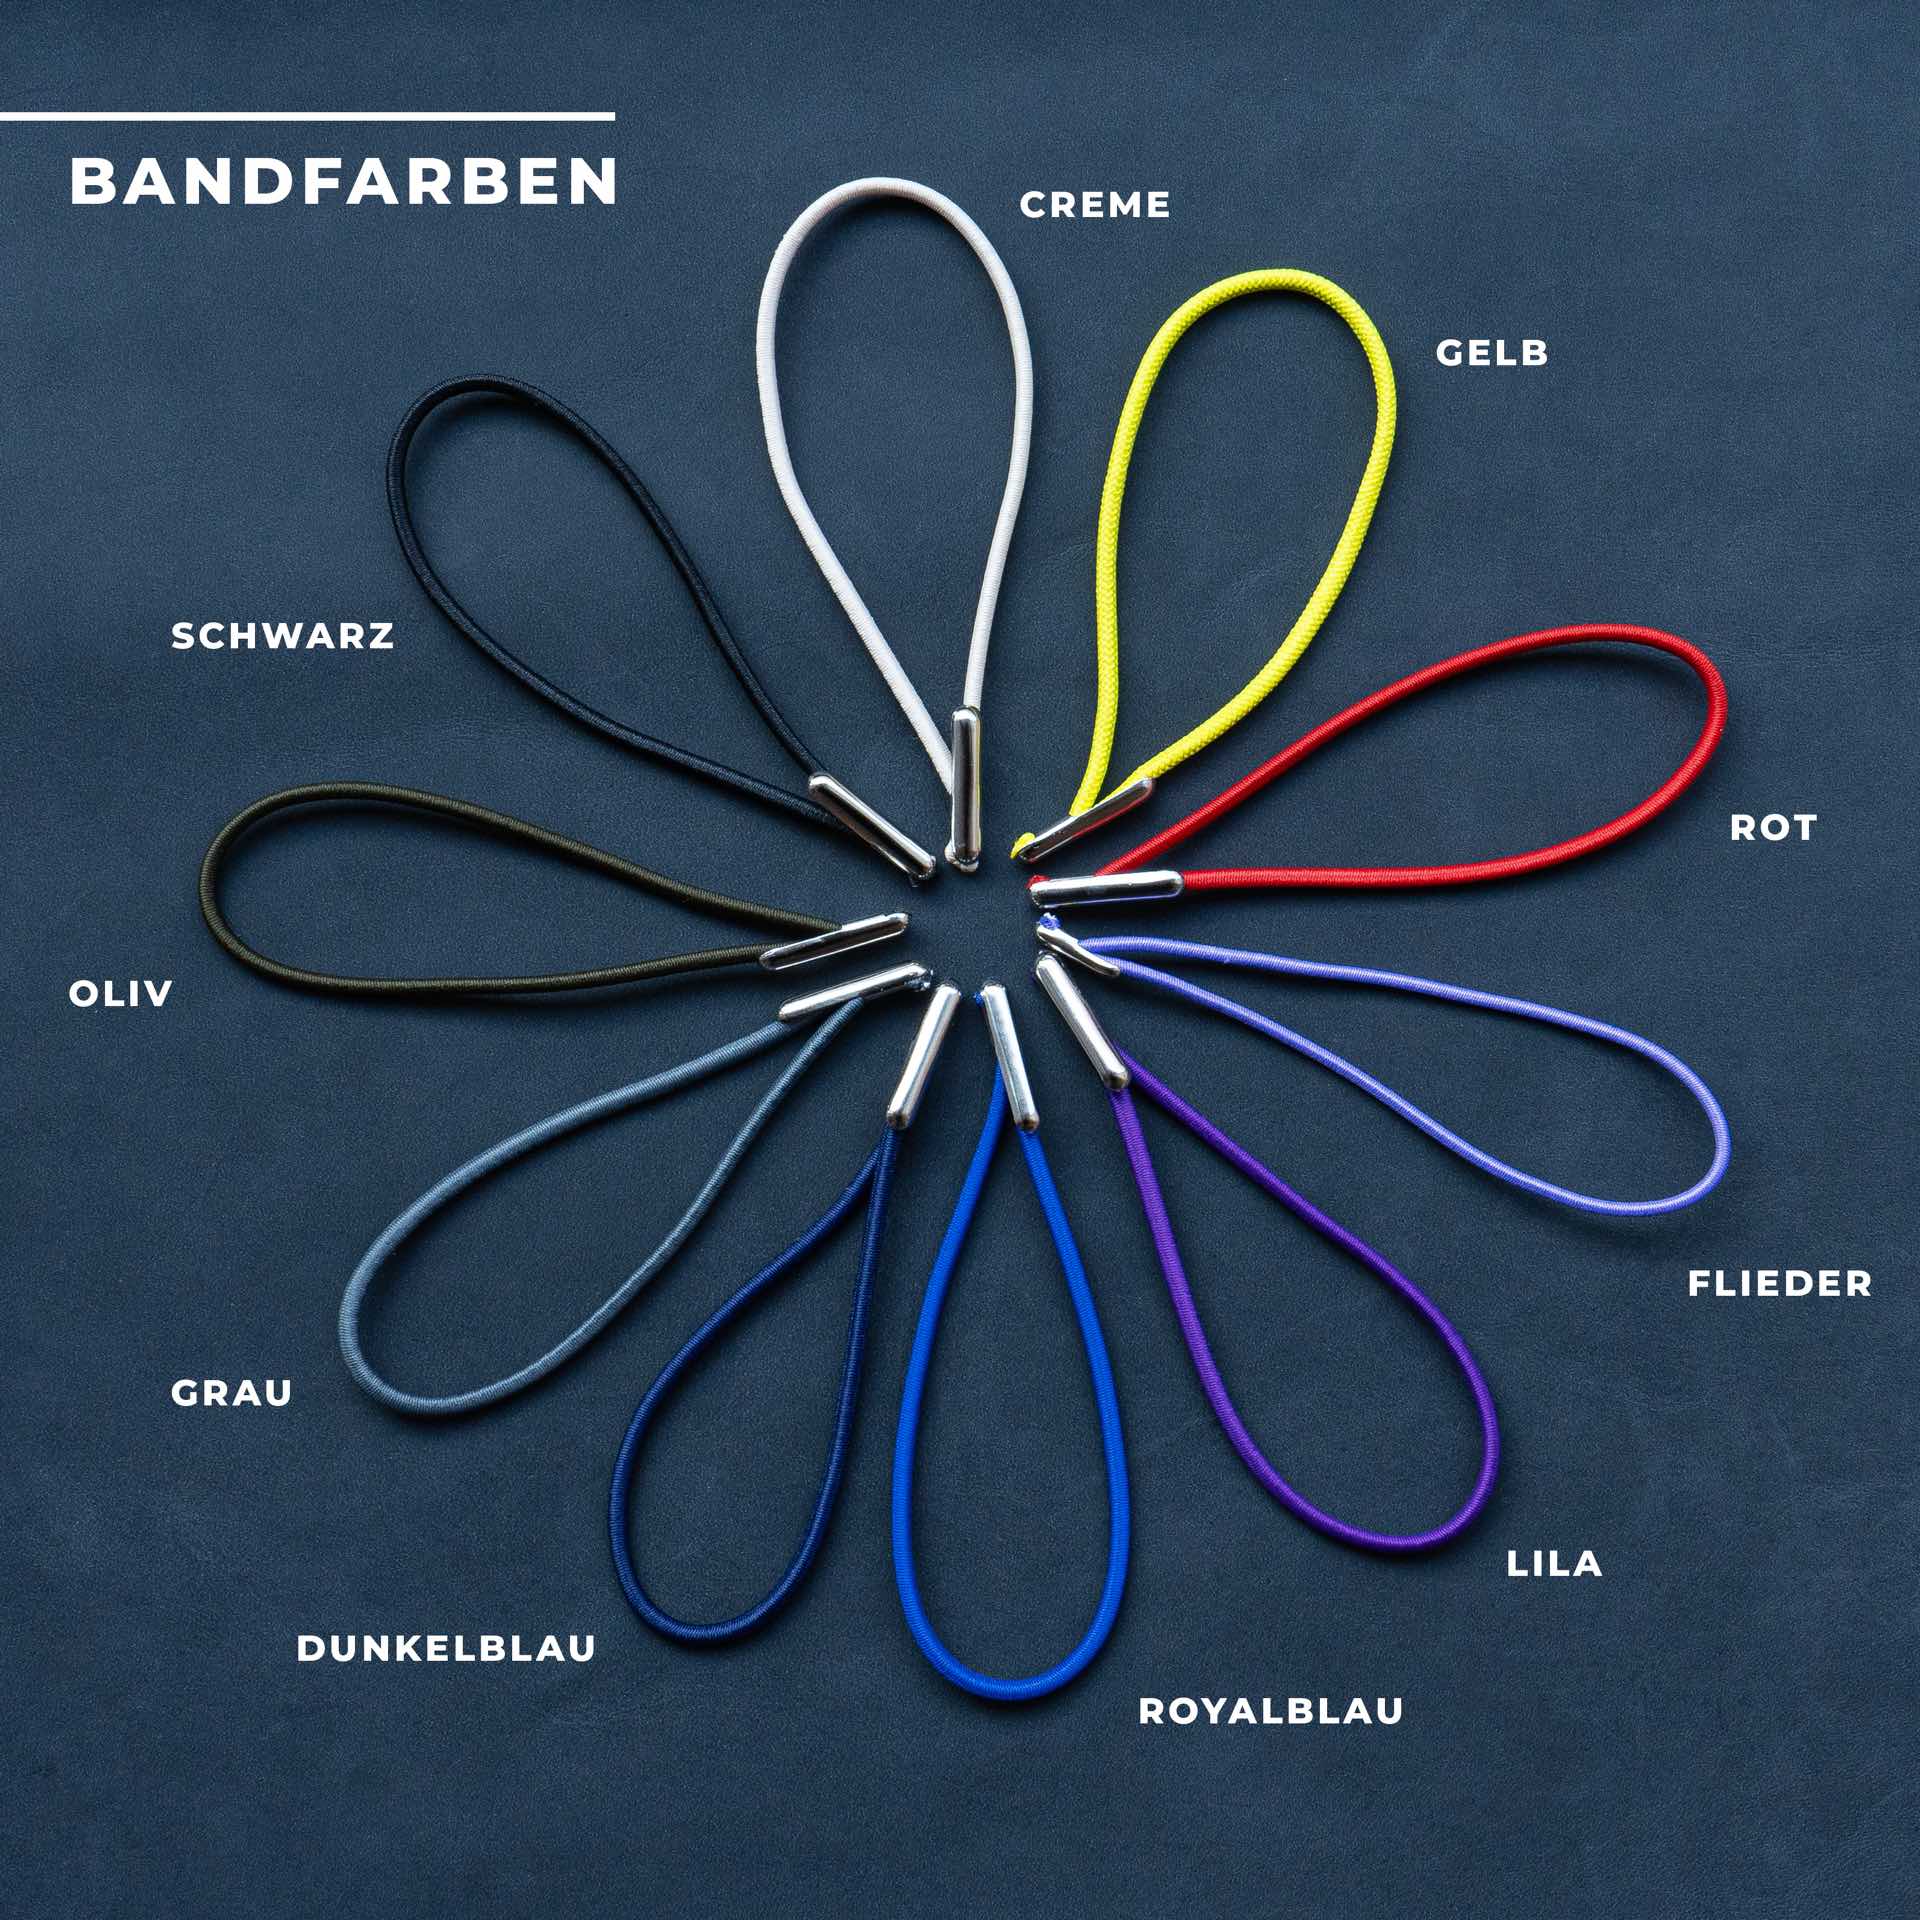 Bandfarben-Franziska-Klee-dunkelblau-taschenleder-bandfarben